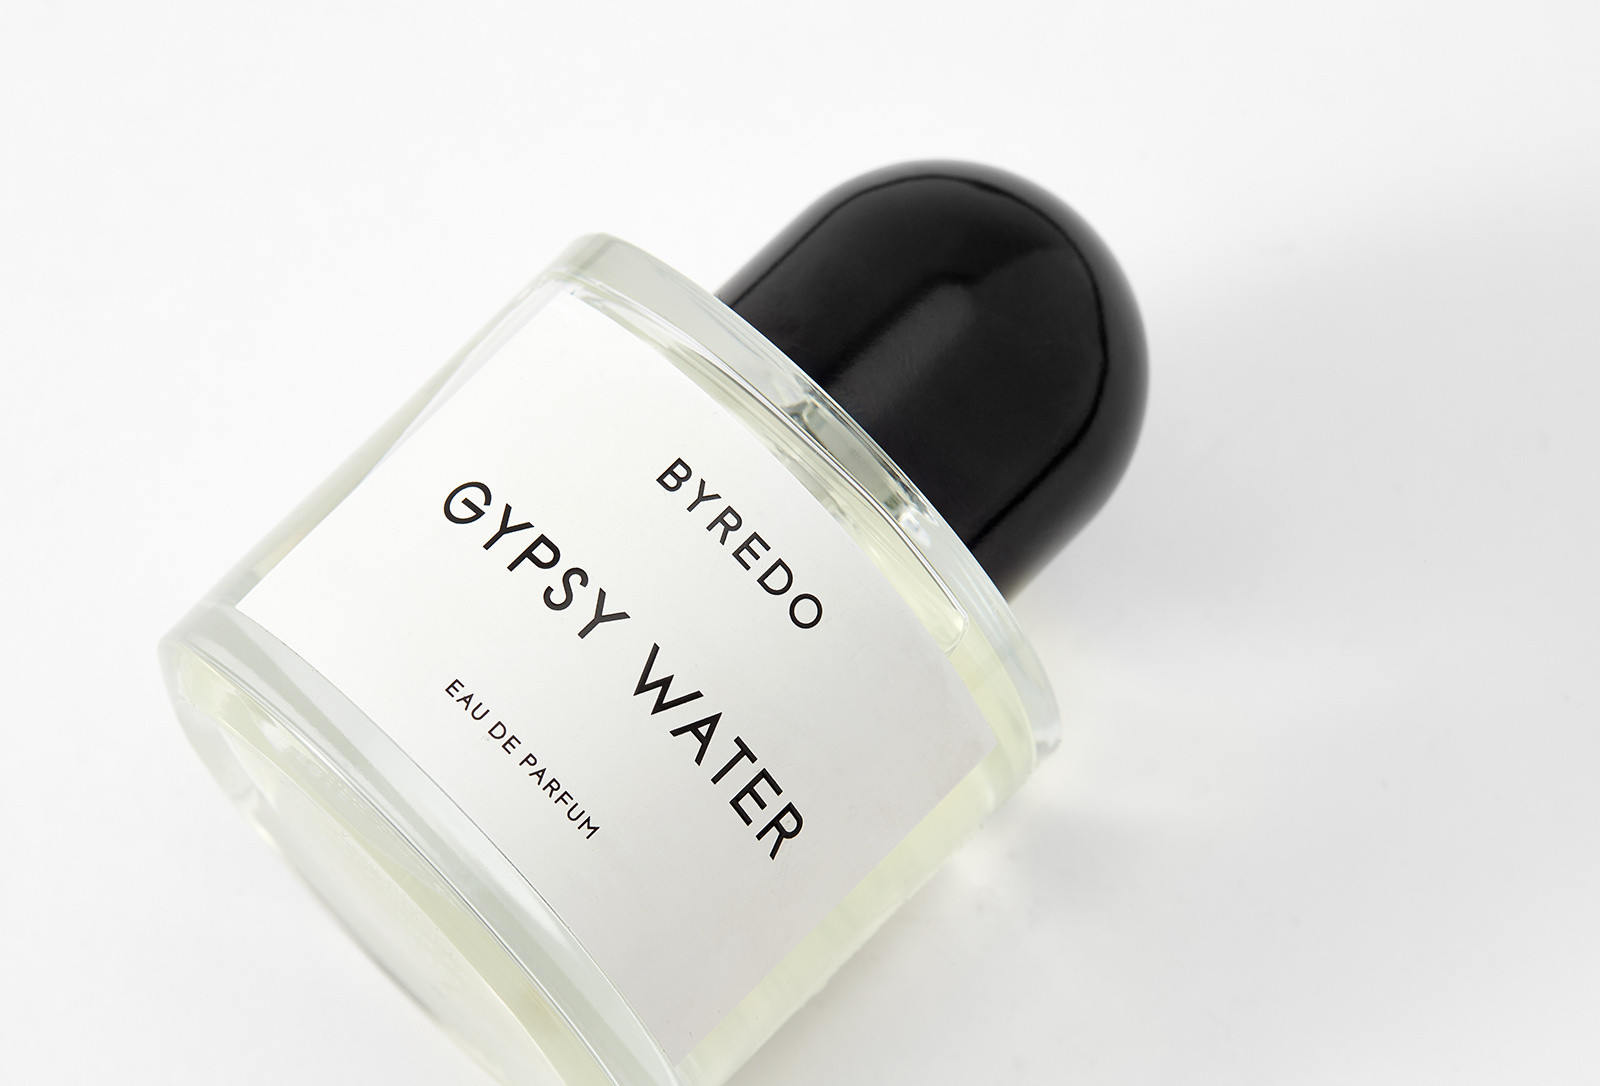 Парфумована вода Byredo Parfums Gypsy Water